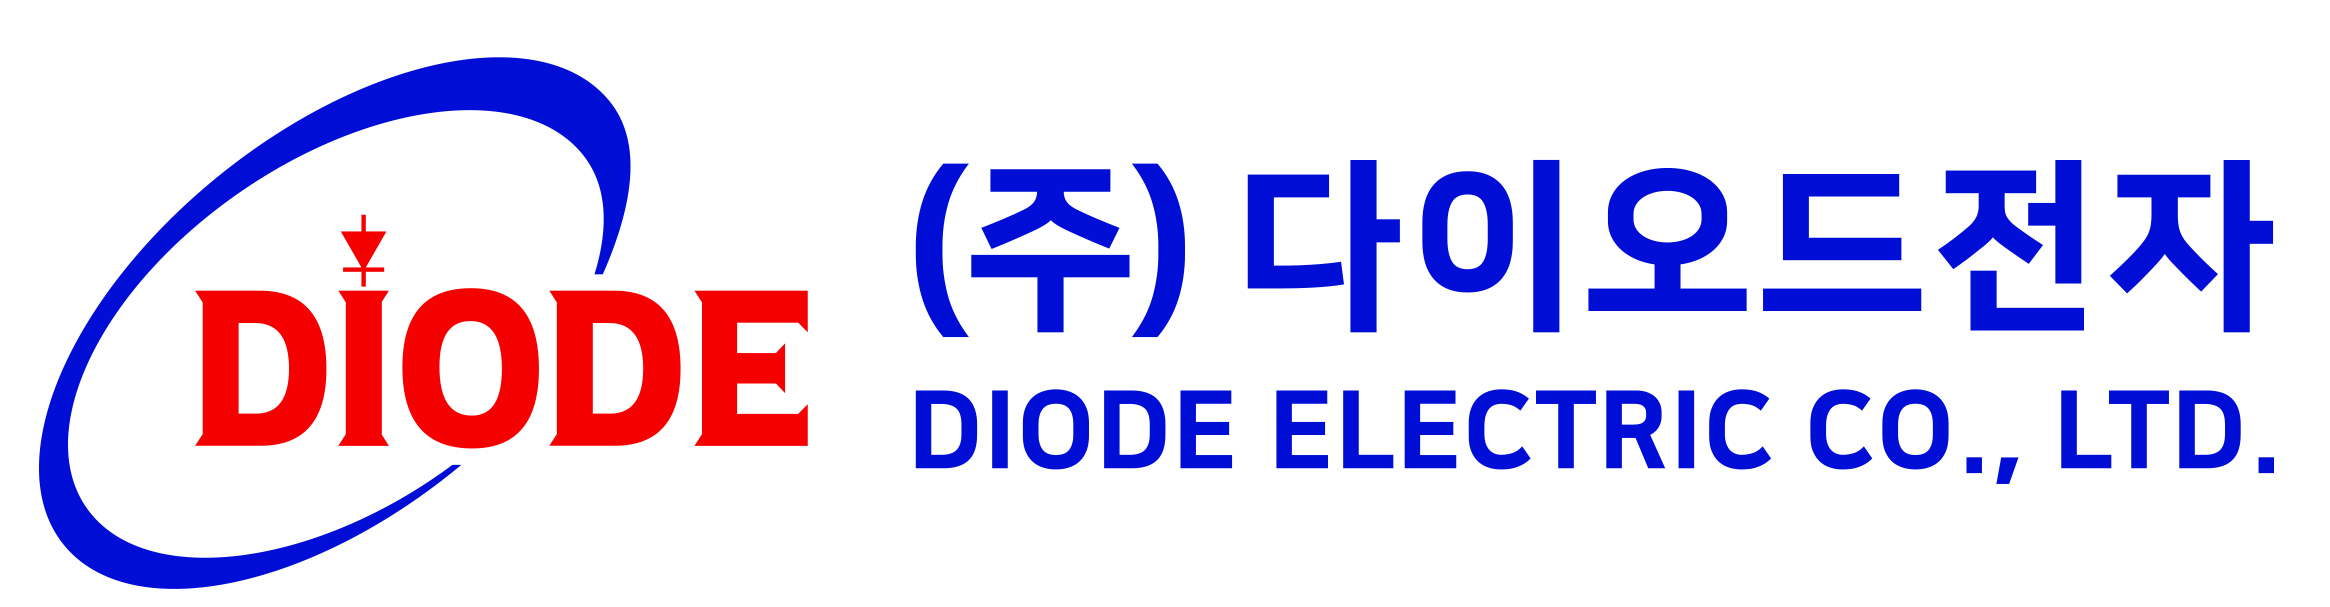 DIODE ELECTRIC CO.,LTD LOGO